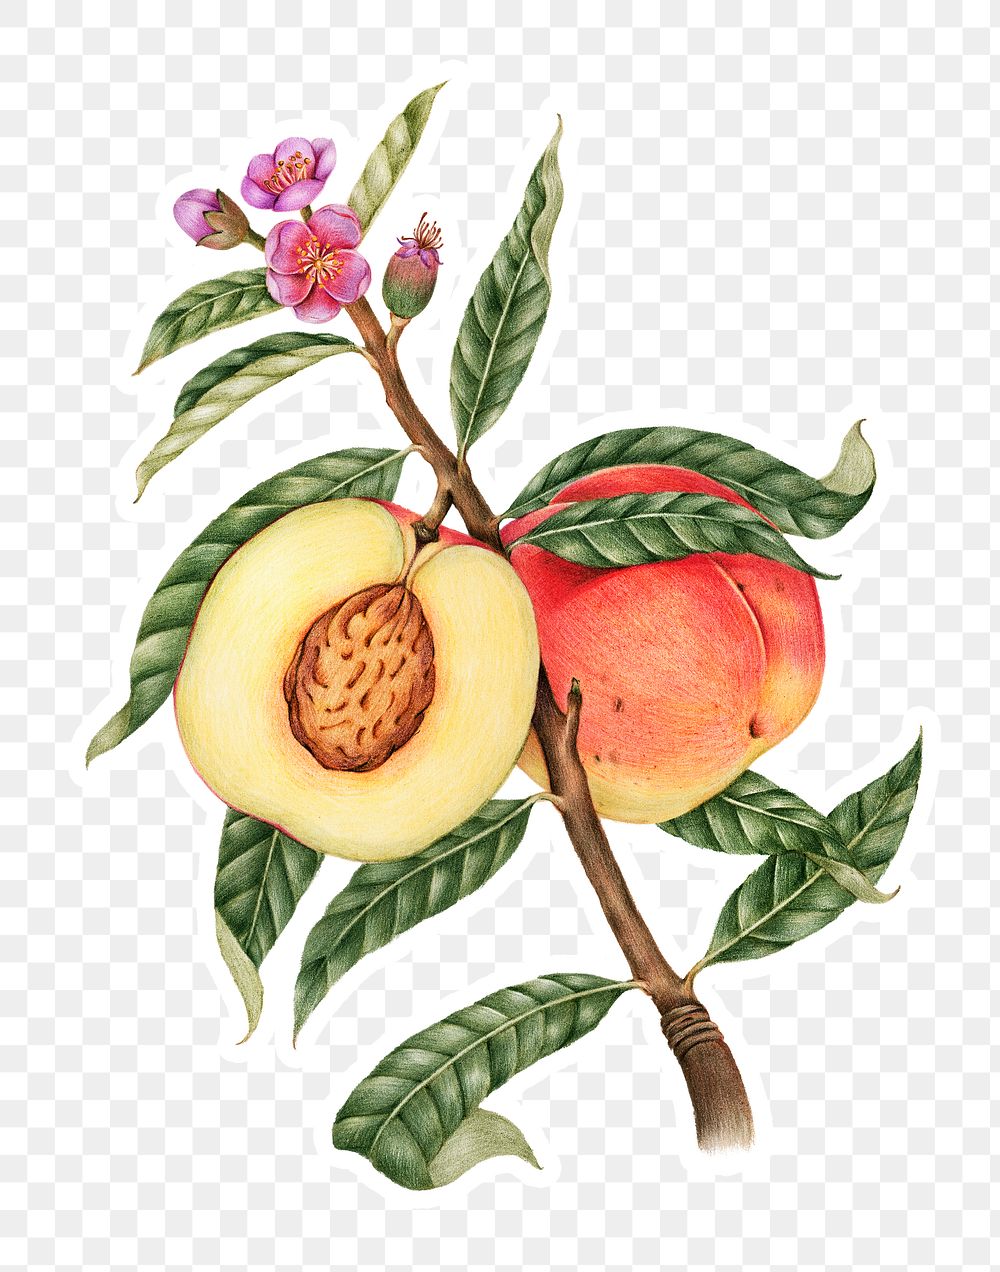 Hand drawn peach fruit sticker with a white border design element